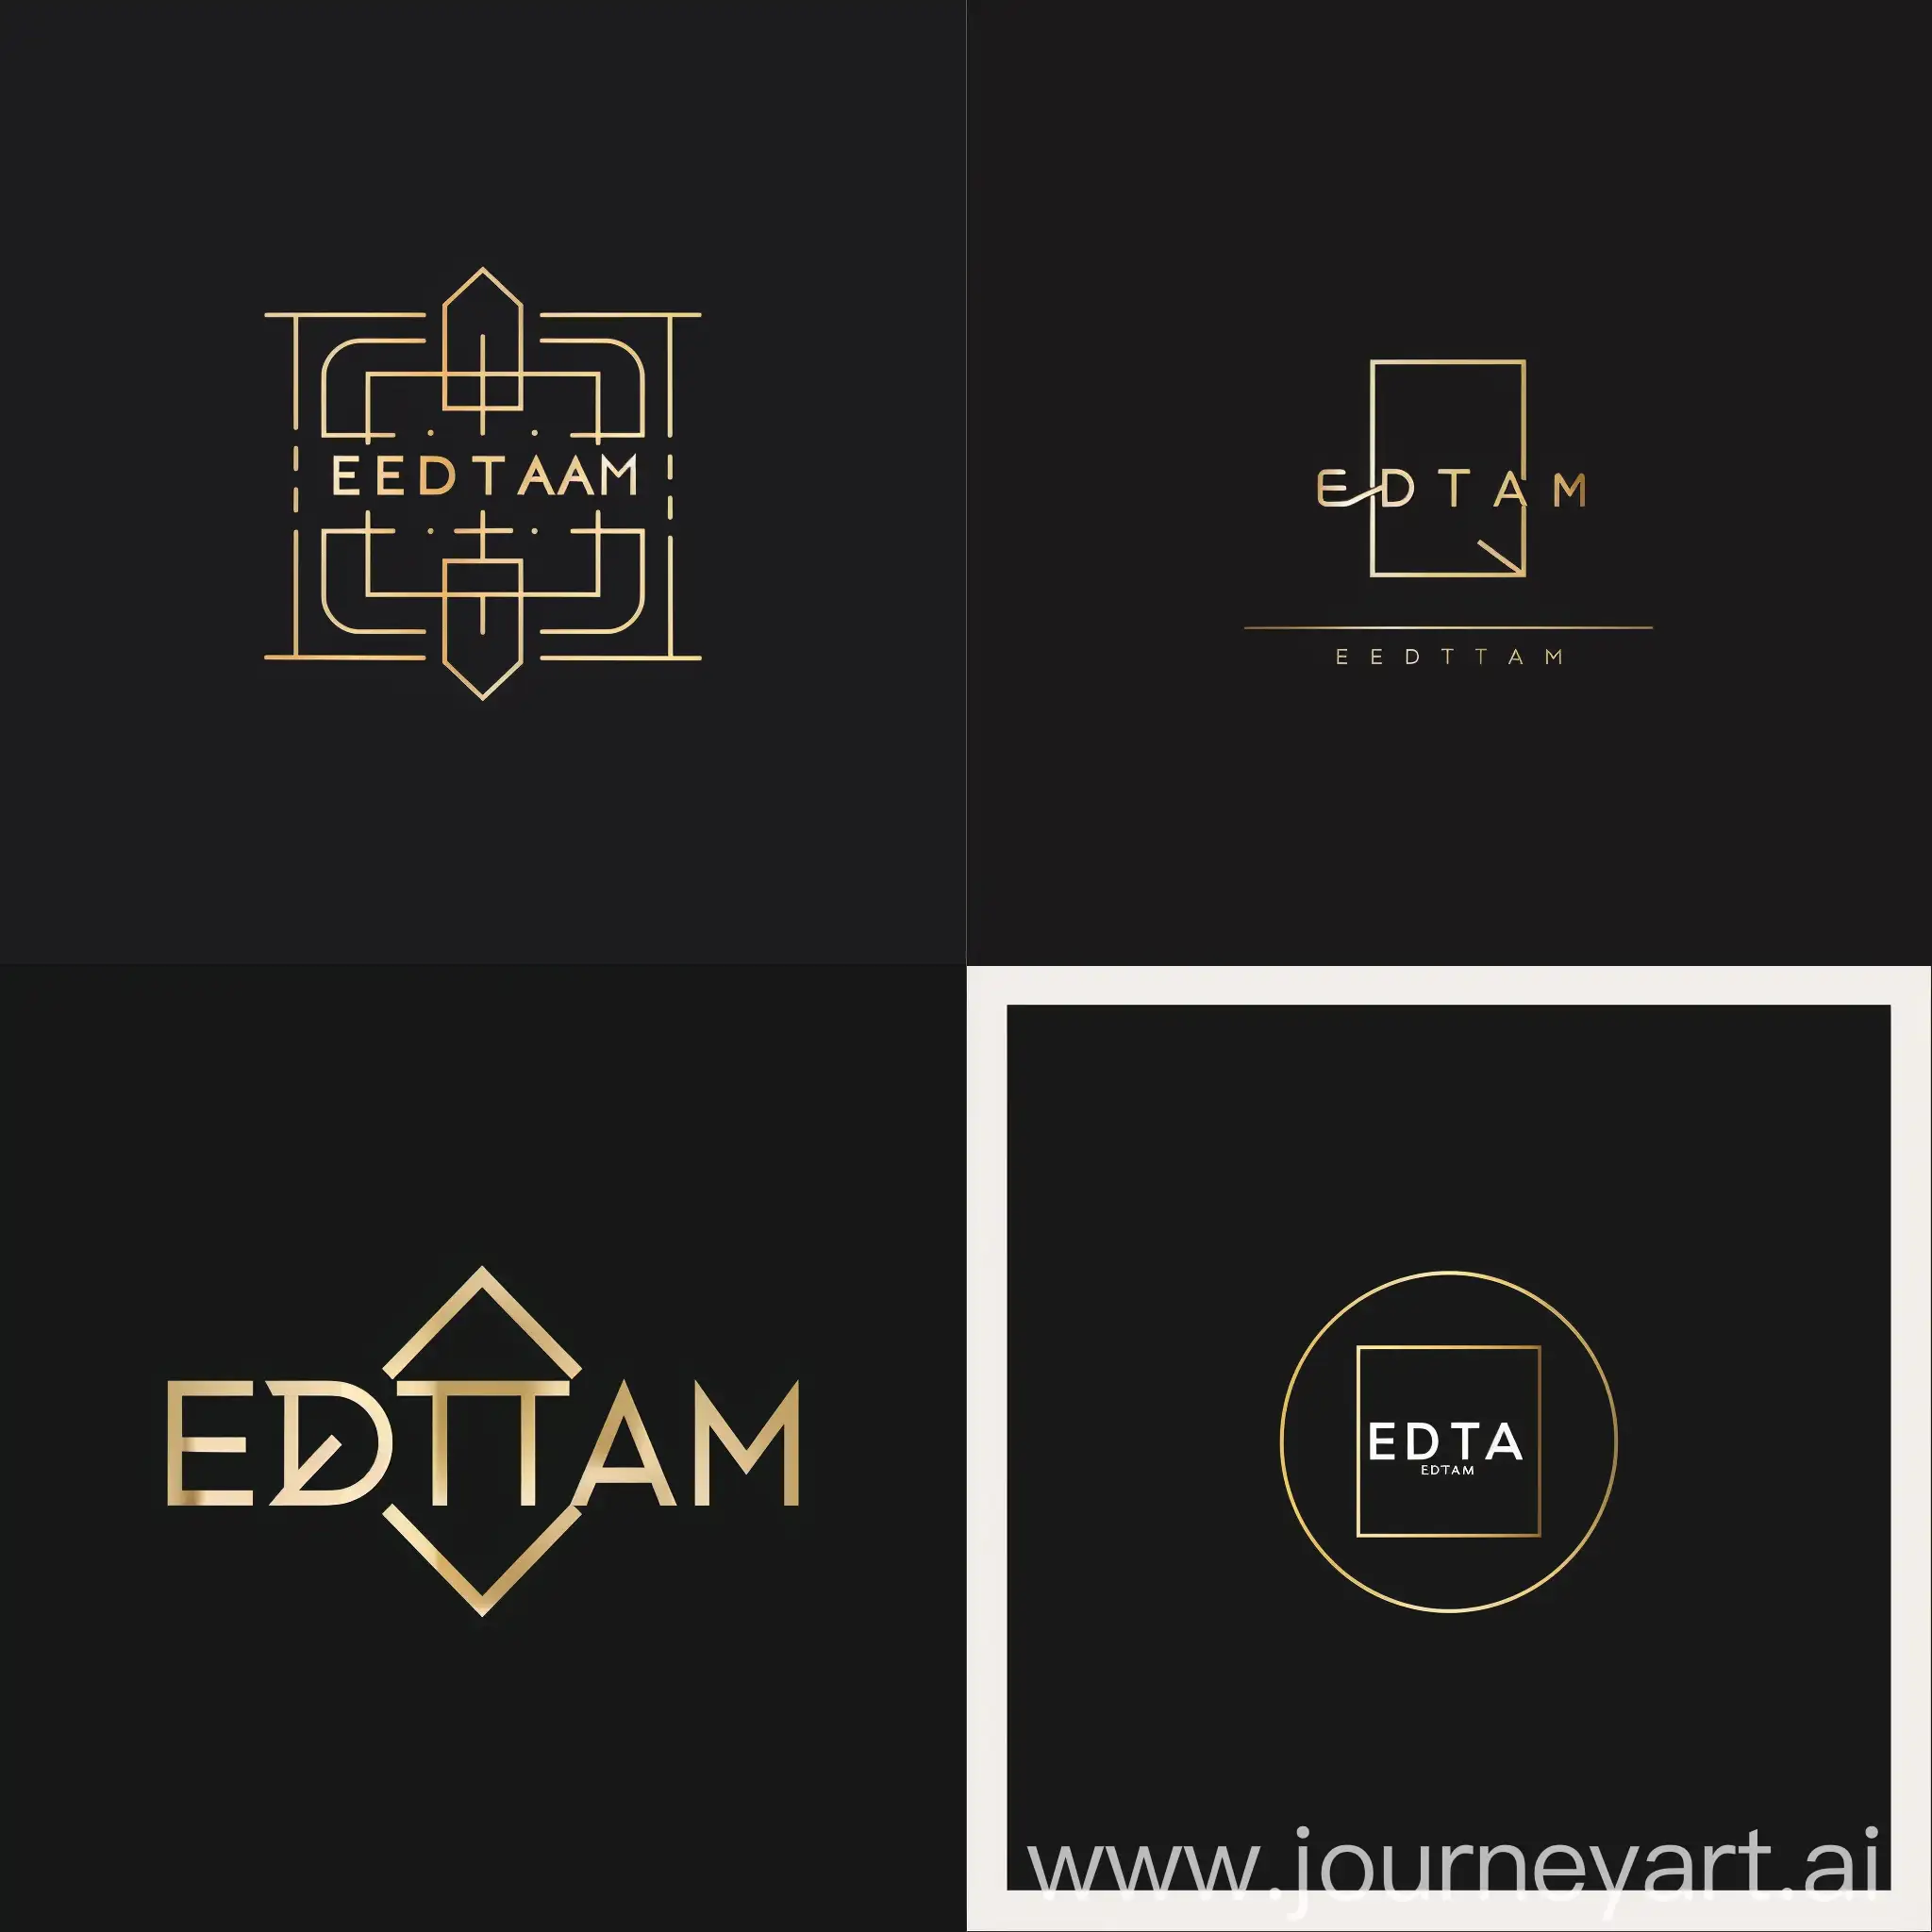 A simple minimalistic "EDTAM" logo